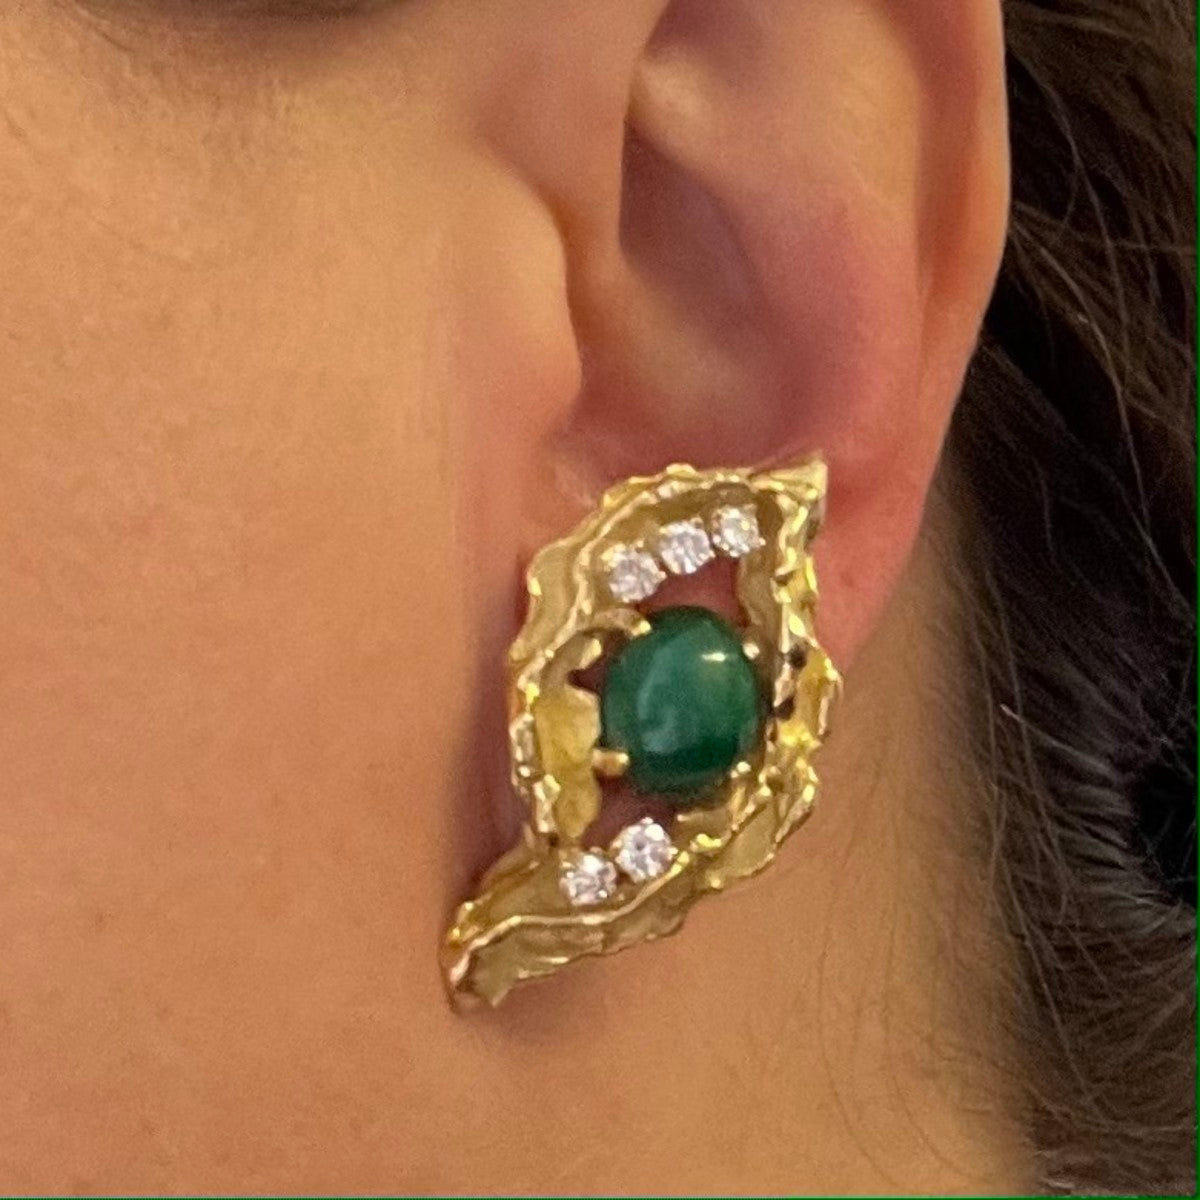 Chaumet French 1960s 18KT Yellow Gold Malachite & Diamond Earrings on ear